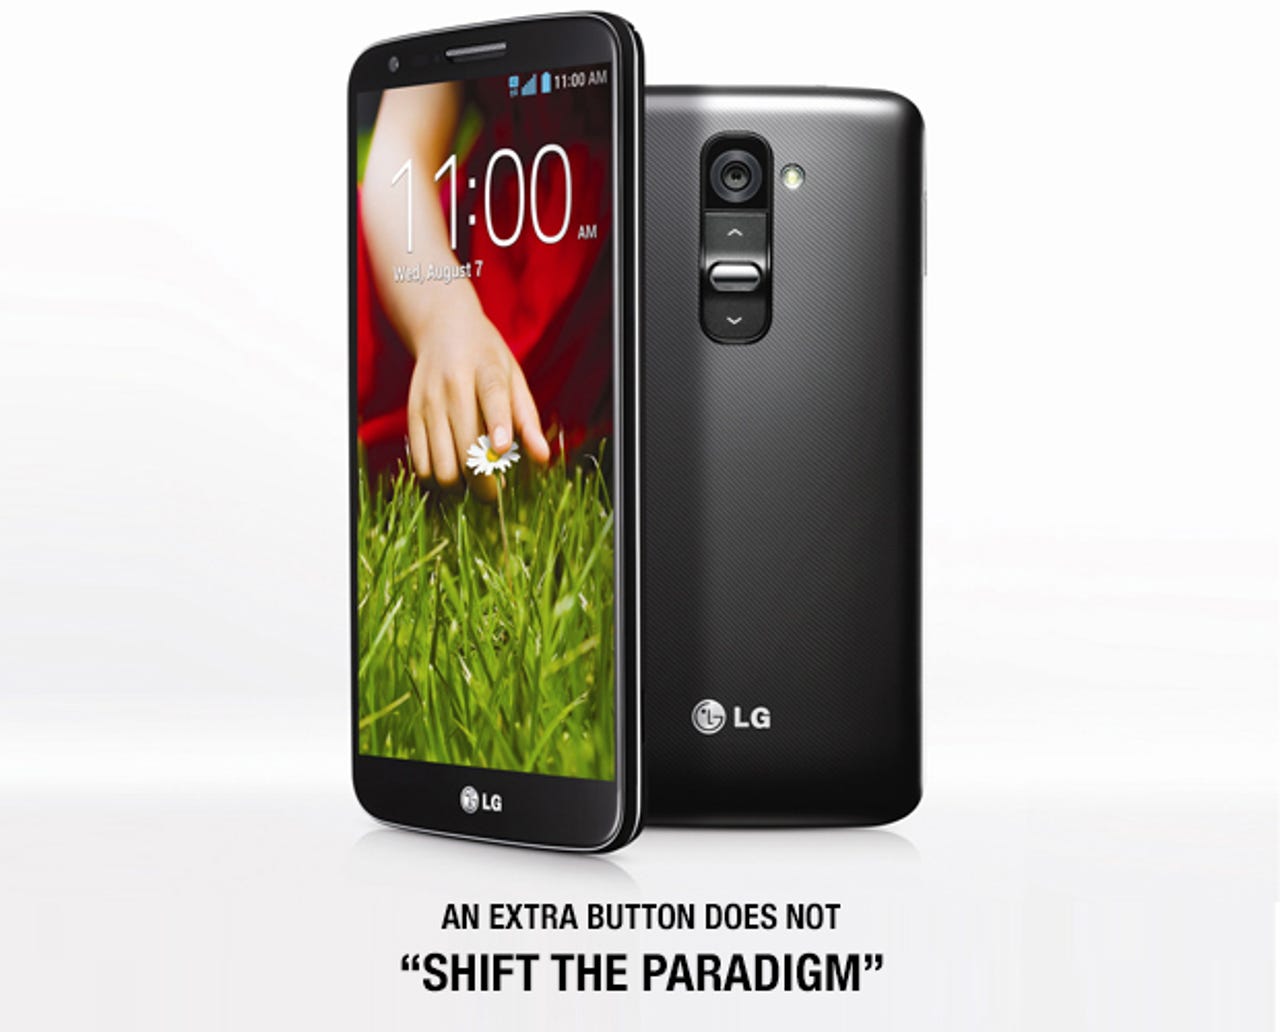 lg-g2-smartphone-paradigm-620px